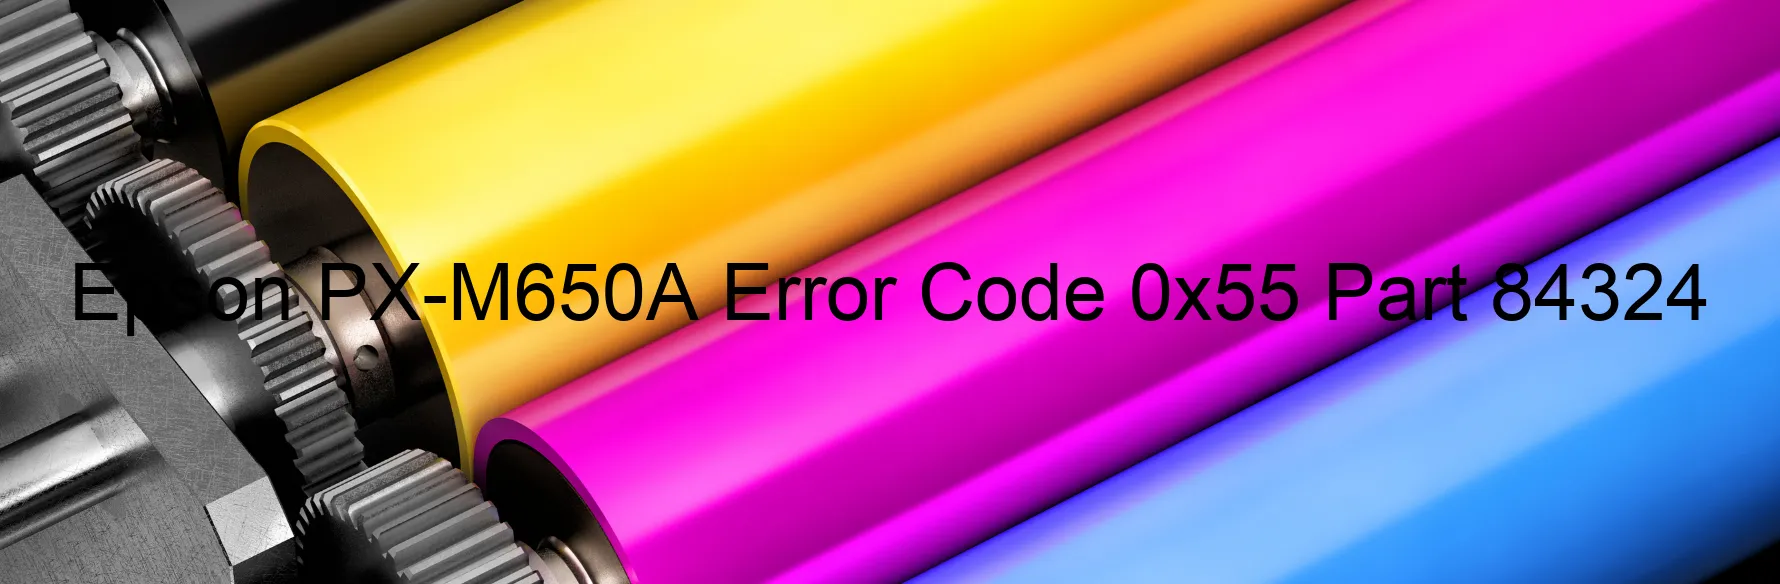 Epson PX-M650A Error Code 0x55 Part 84324